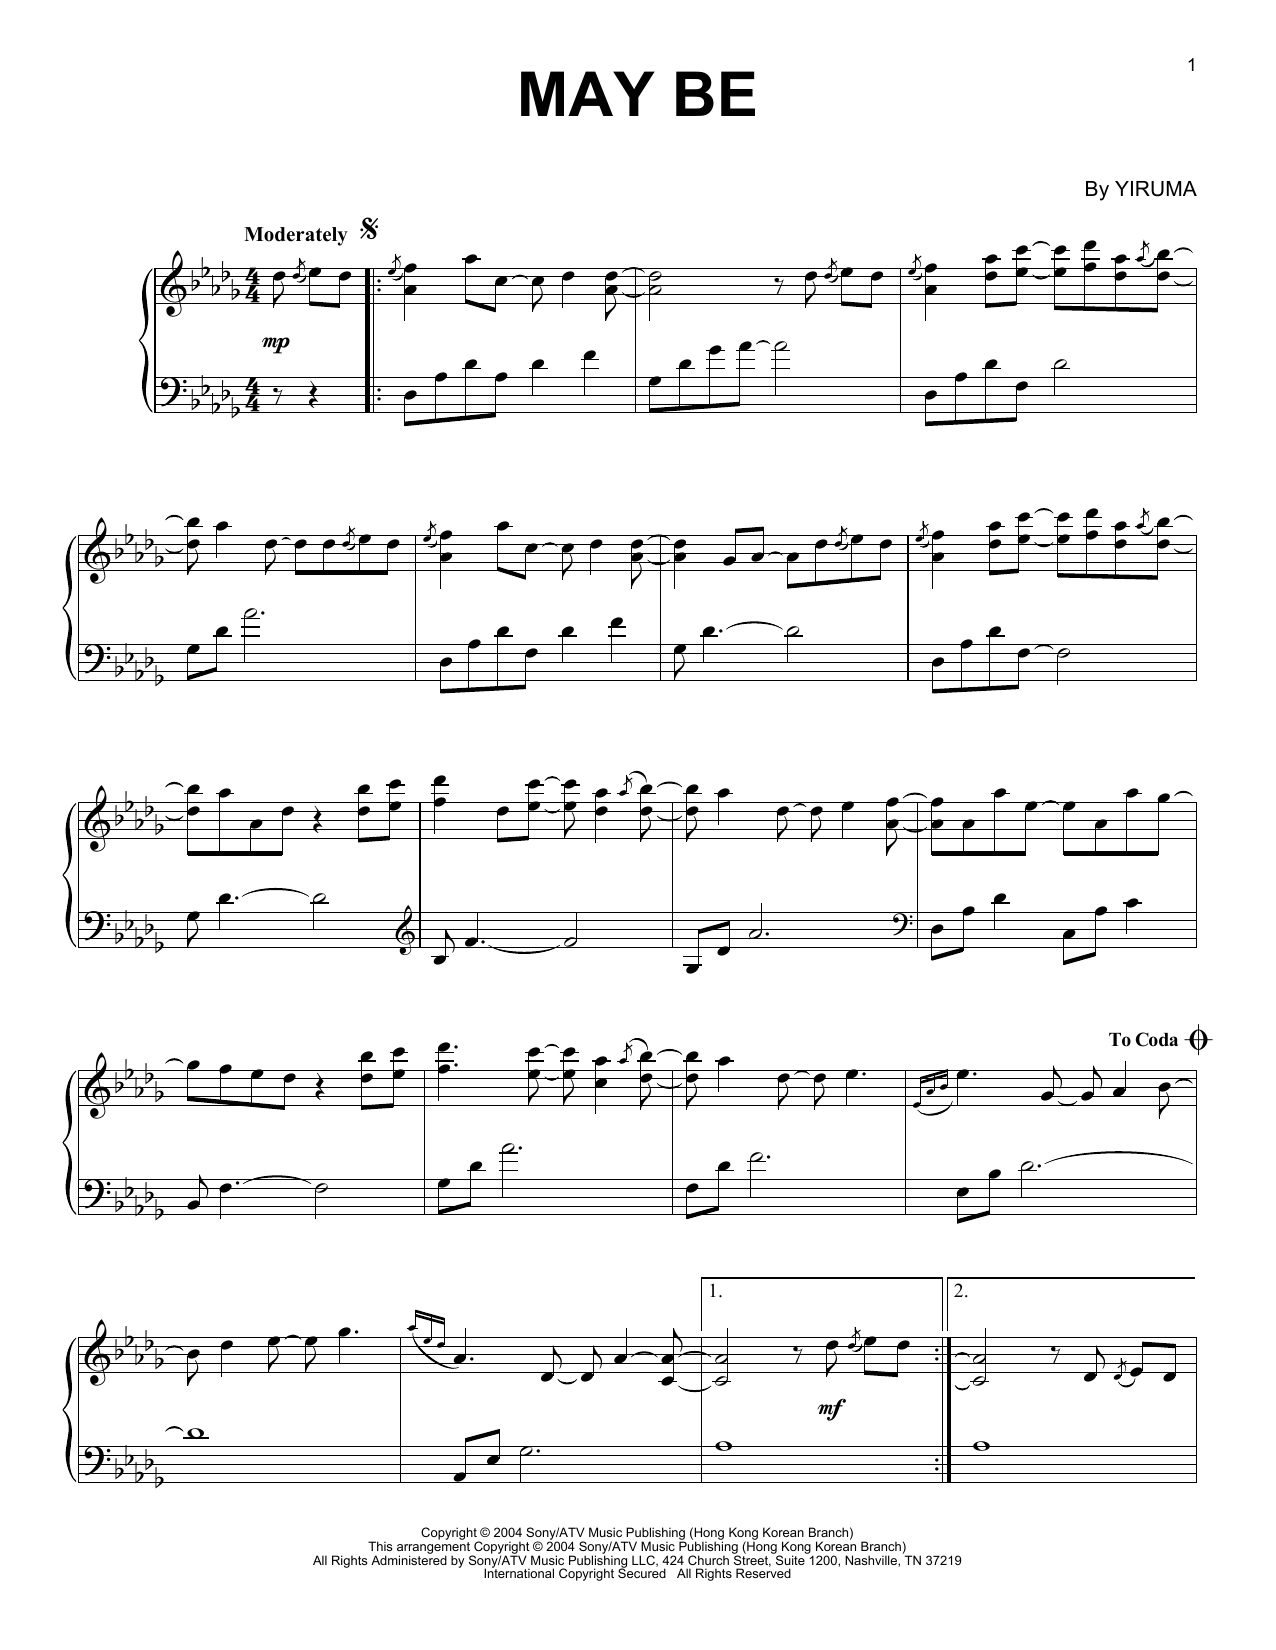 Yiruma May Be Sheet Music Notes & Chords for Easy Piano - Download or Print PDF